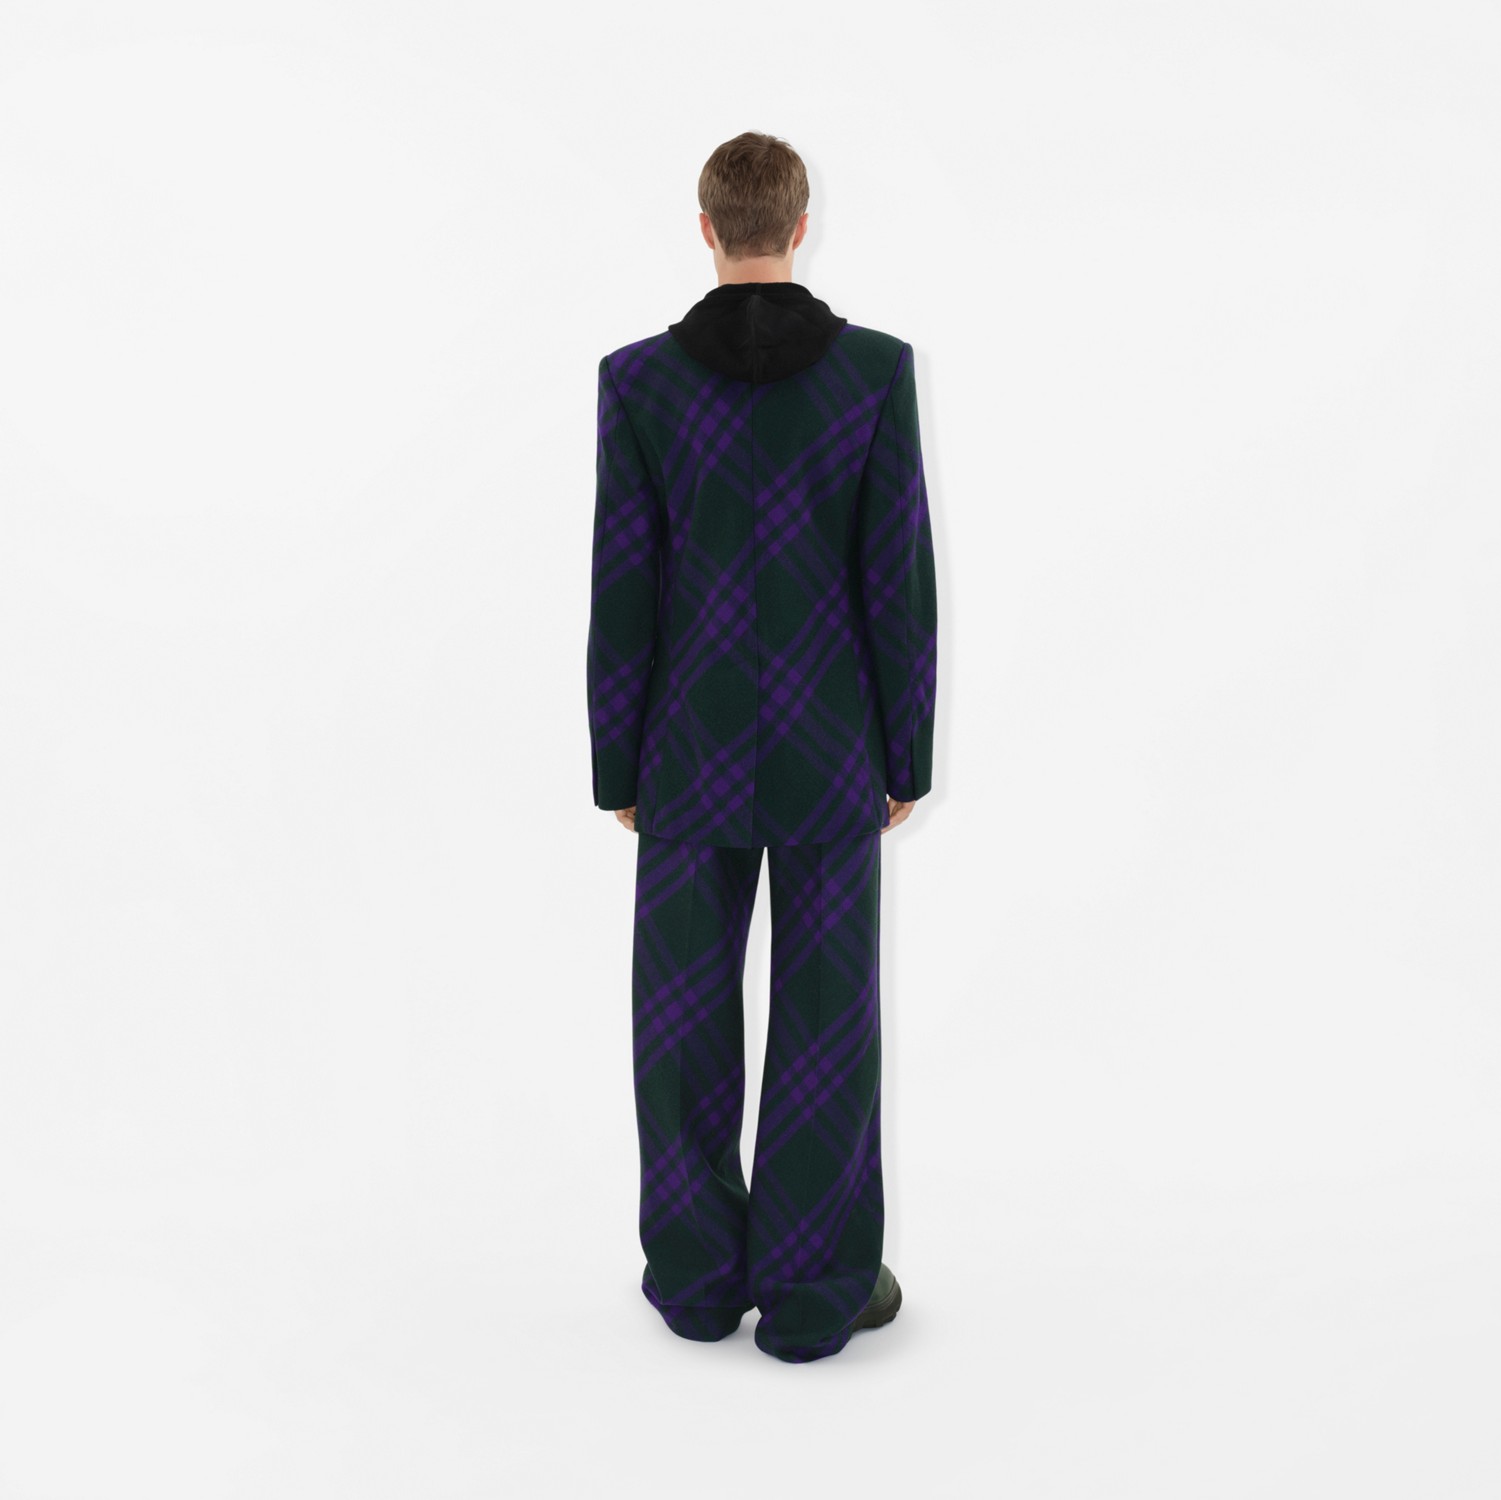 Pantaloni in lana Check (Deep Royal) - Uomo | Sito ufficiale Burberry®